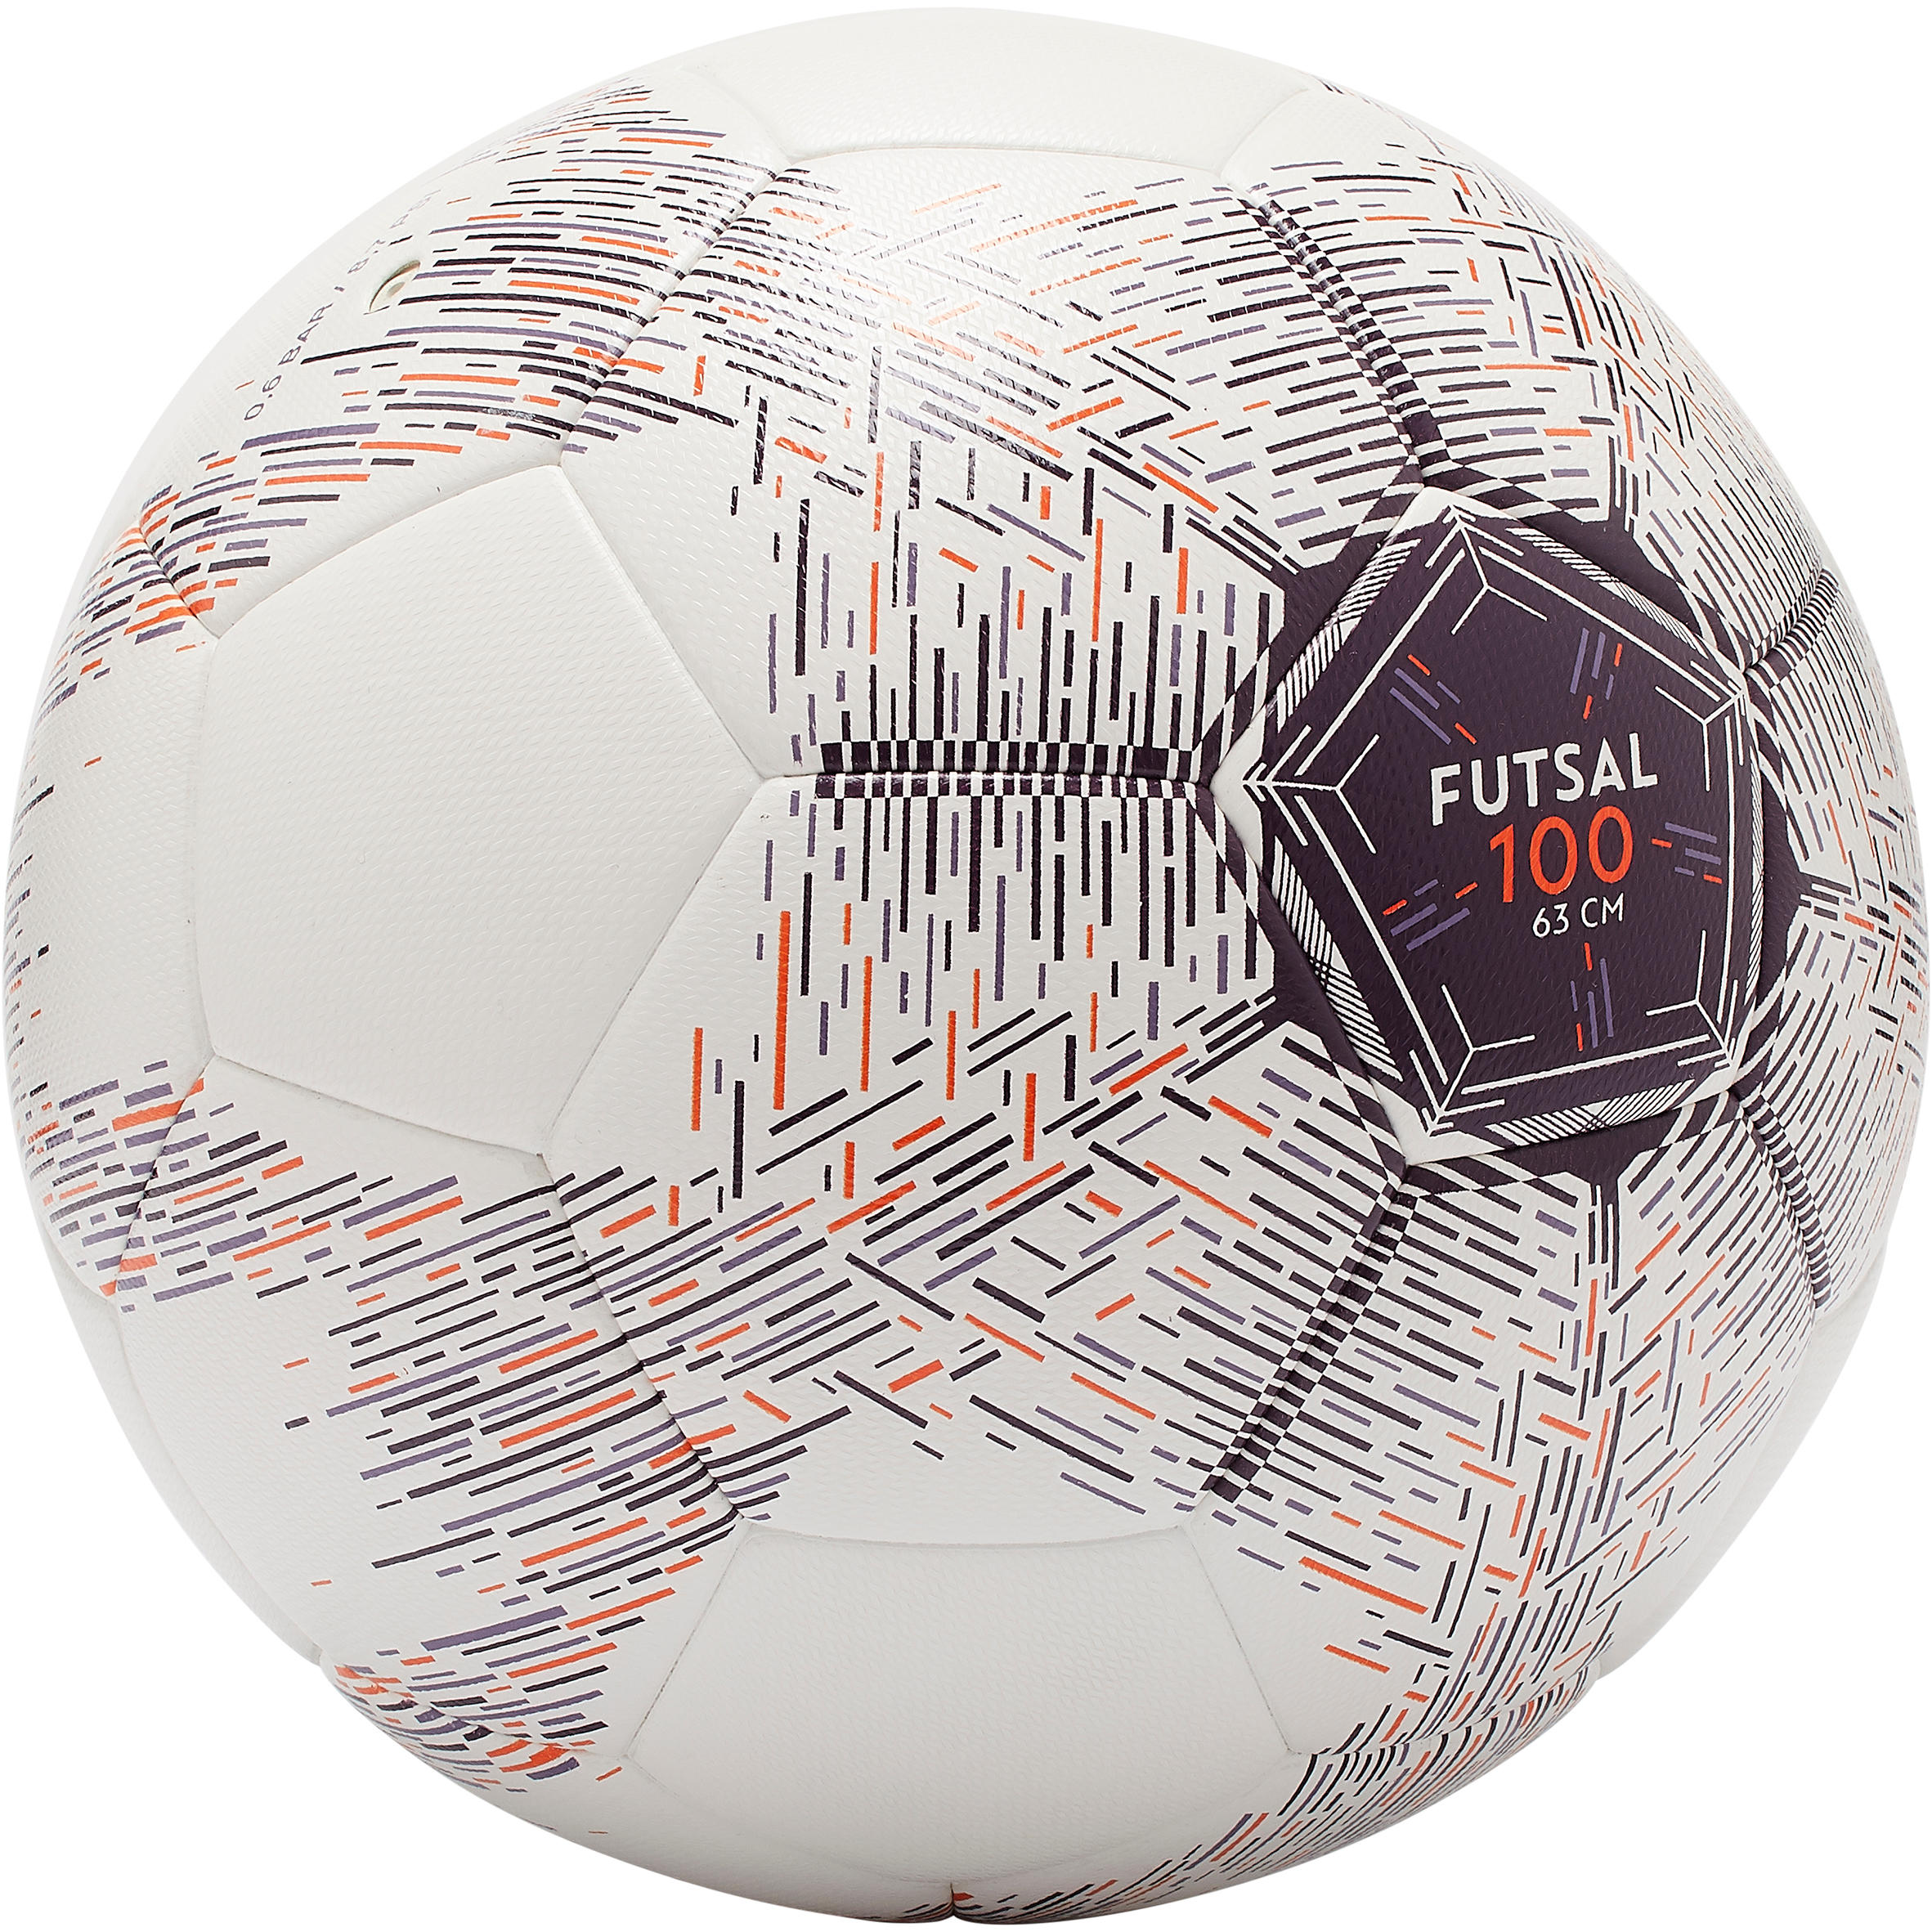 Decathlon Futsal Hybrid Ball (Lasting Air Retention) - Imviso